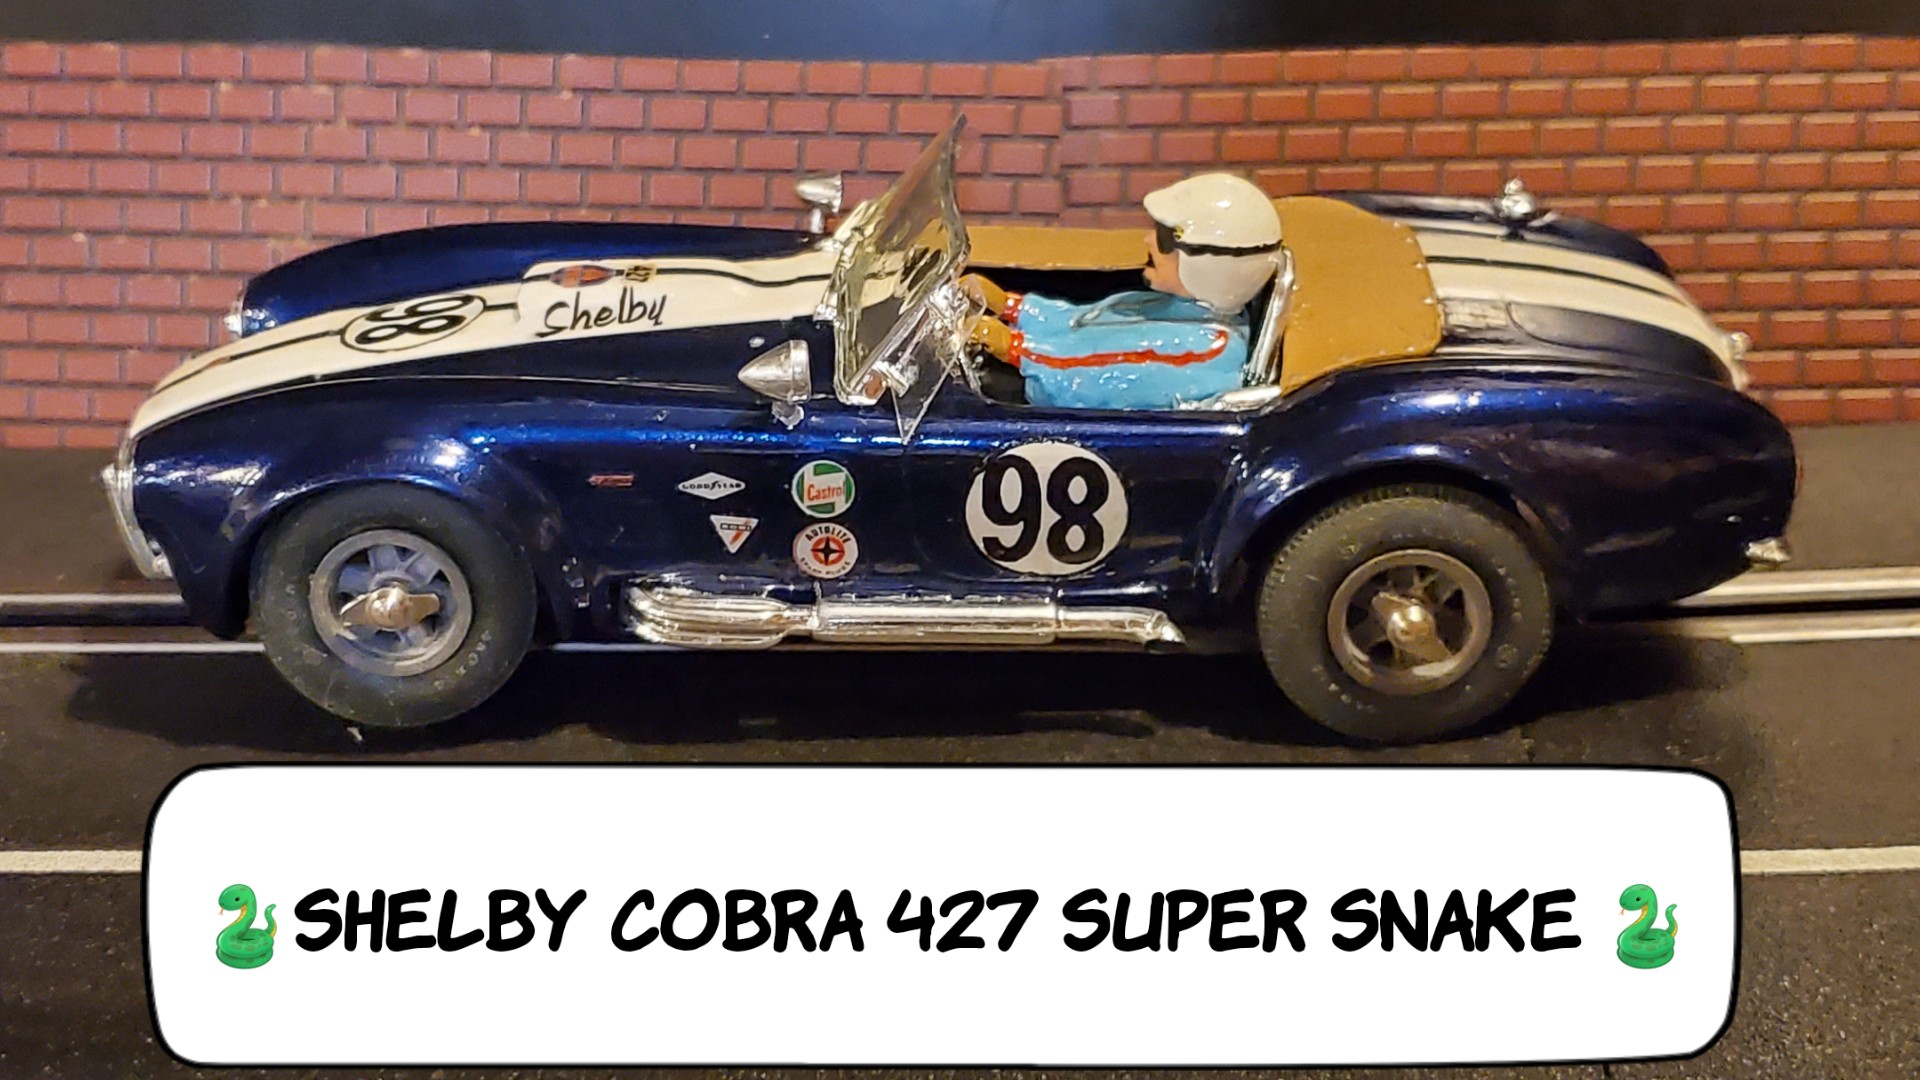  * SOLD * Shelby Cobra 427 Super Snake Slot Car 1:24 Scale Car 98 in Blue